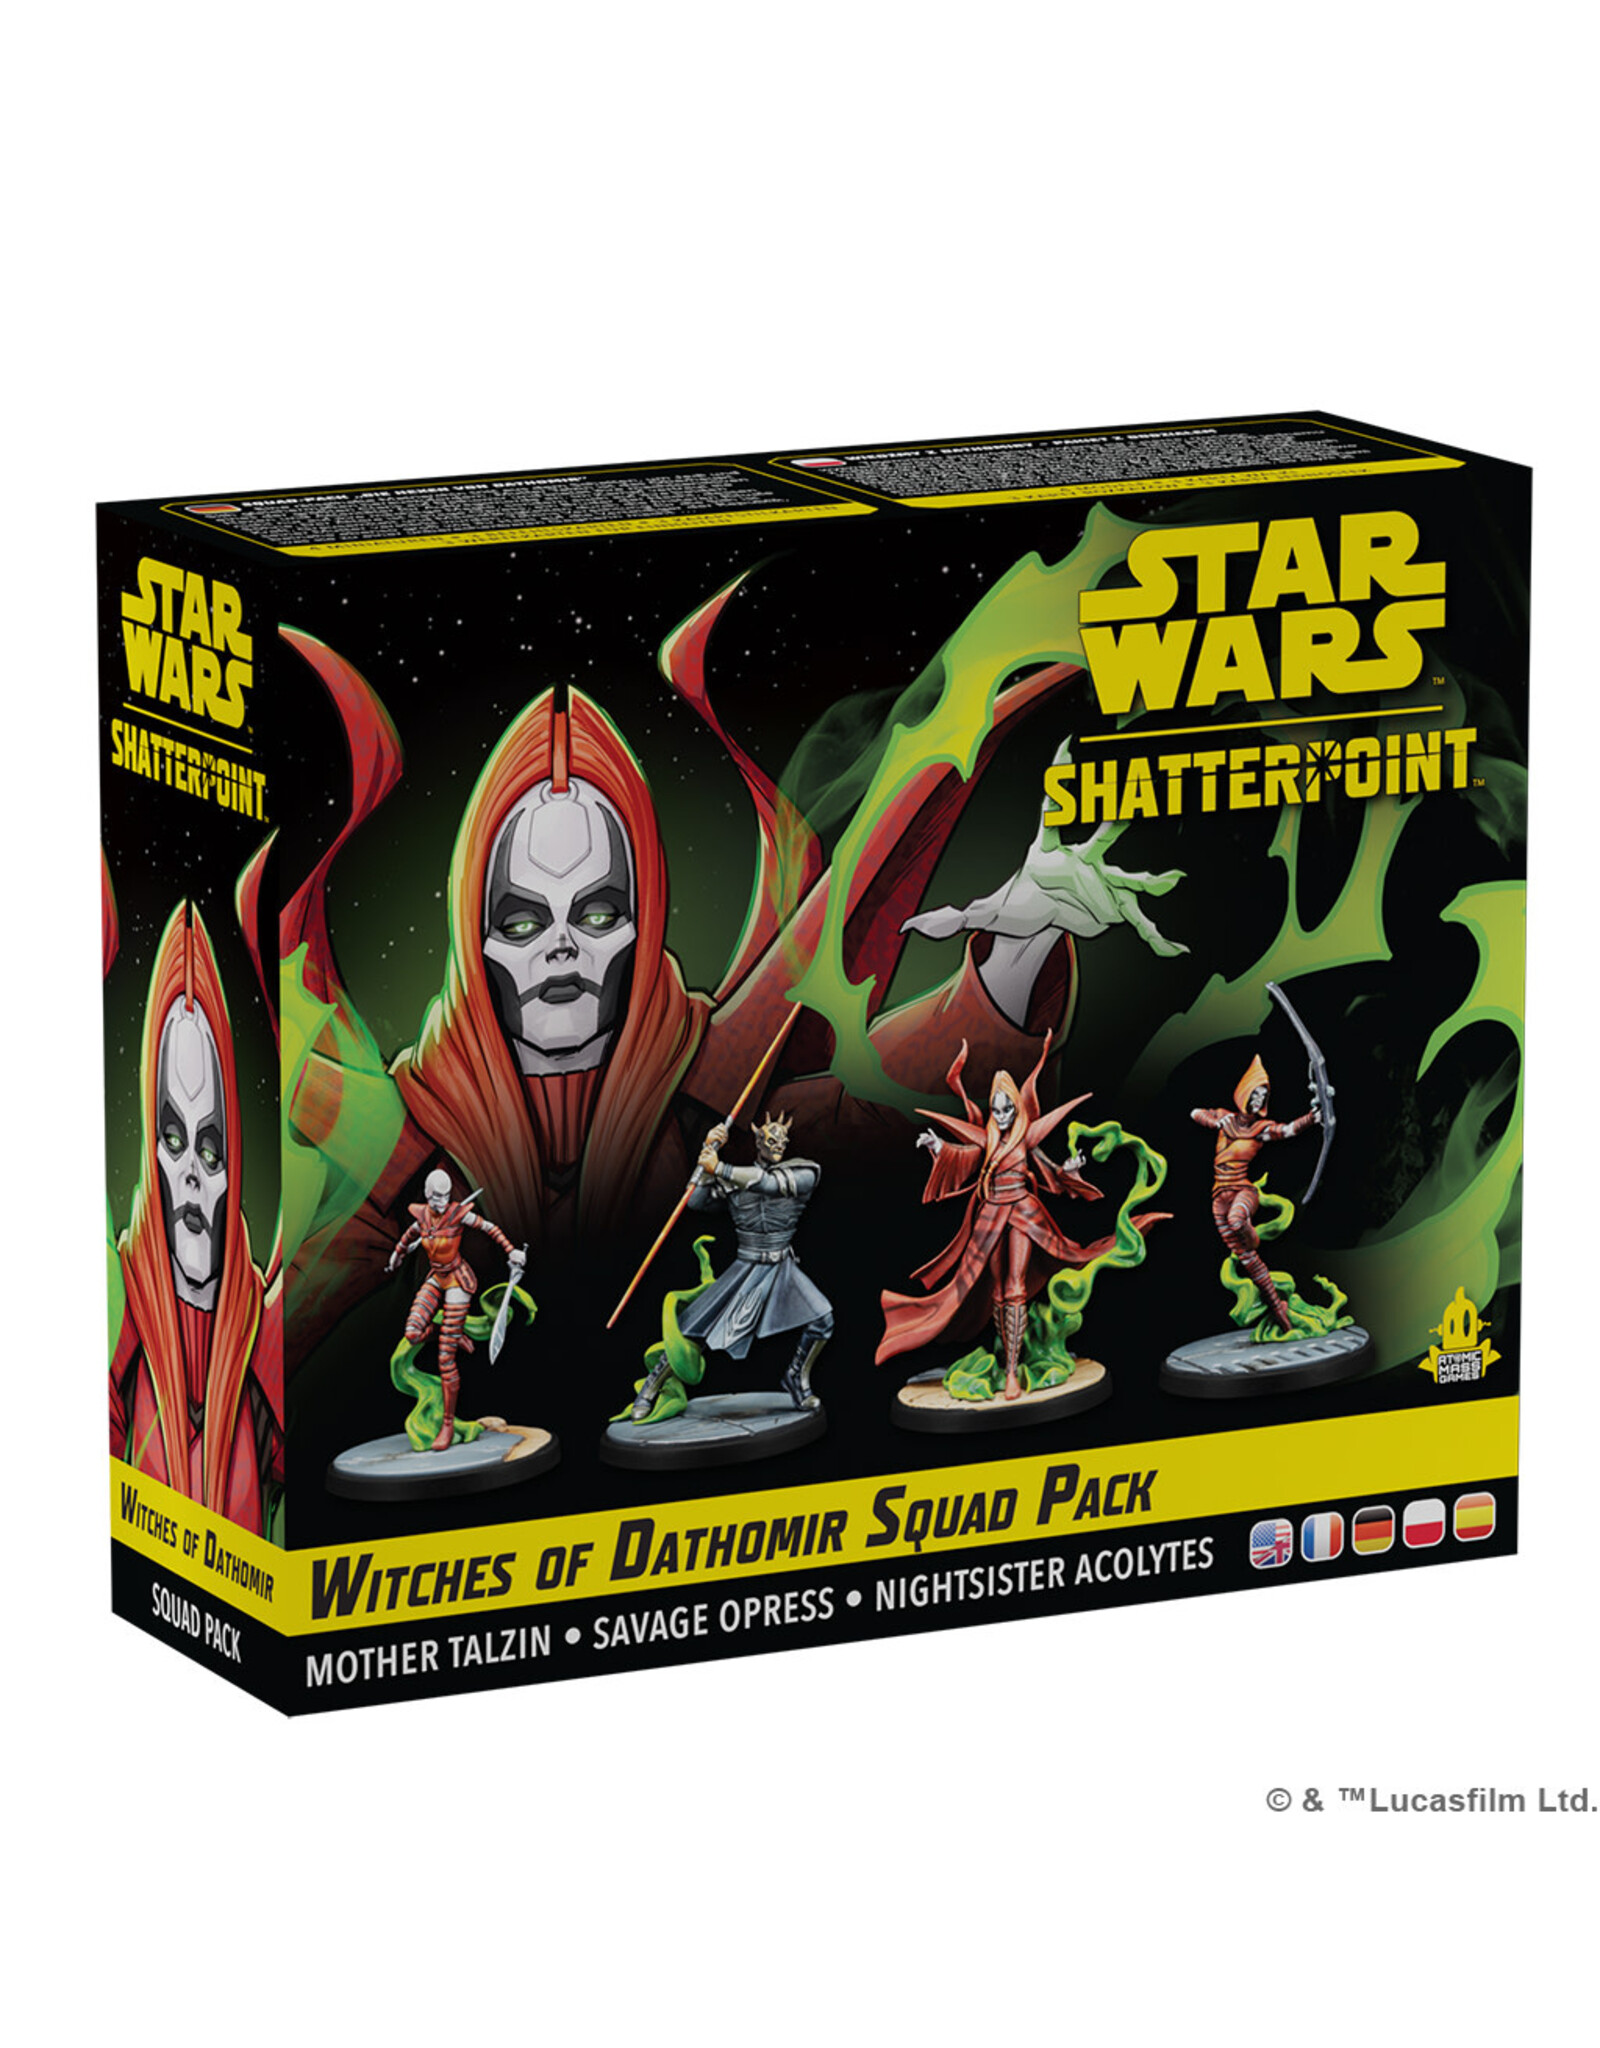 Star Wars Shatterpoint Star Wars Shatterpoint Witches of Dathomir Squad Pack